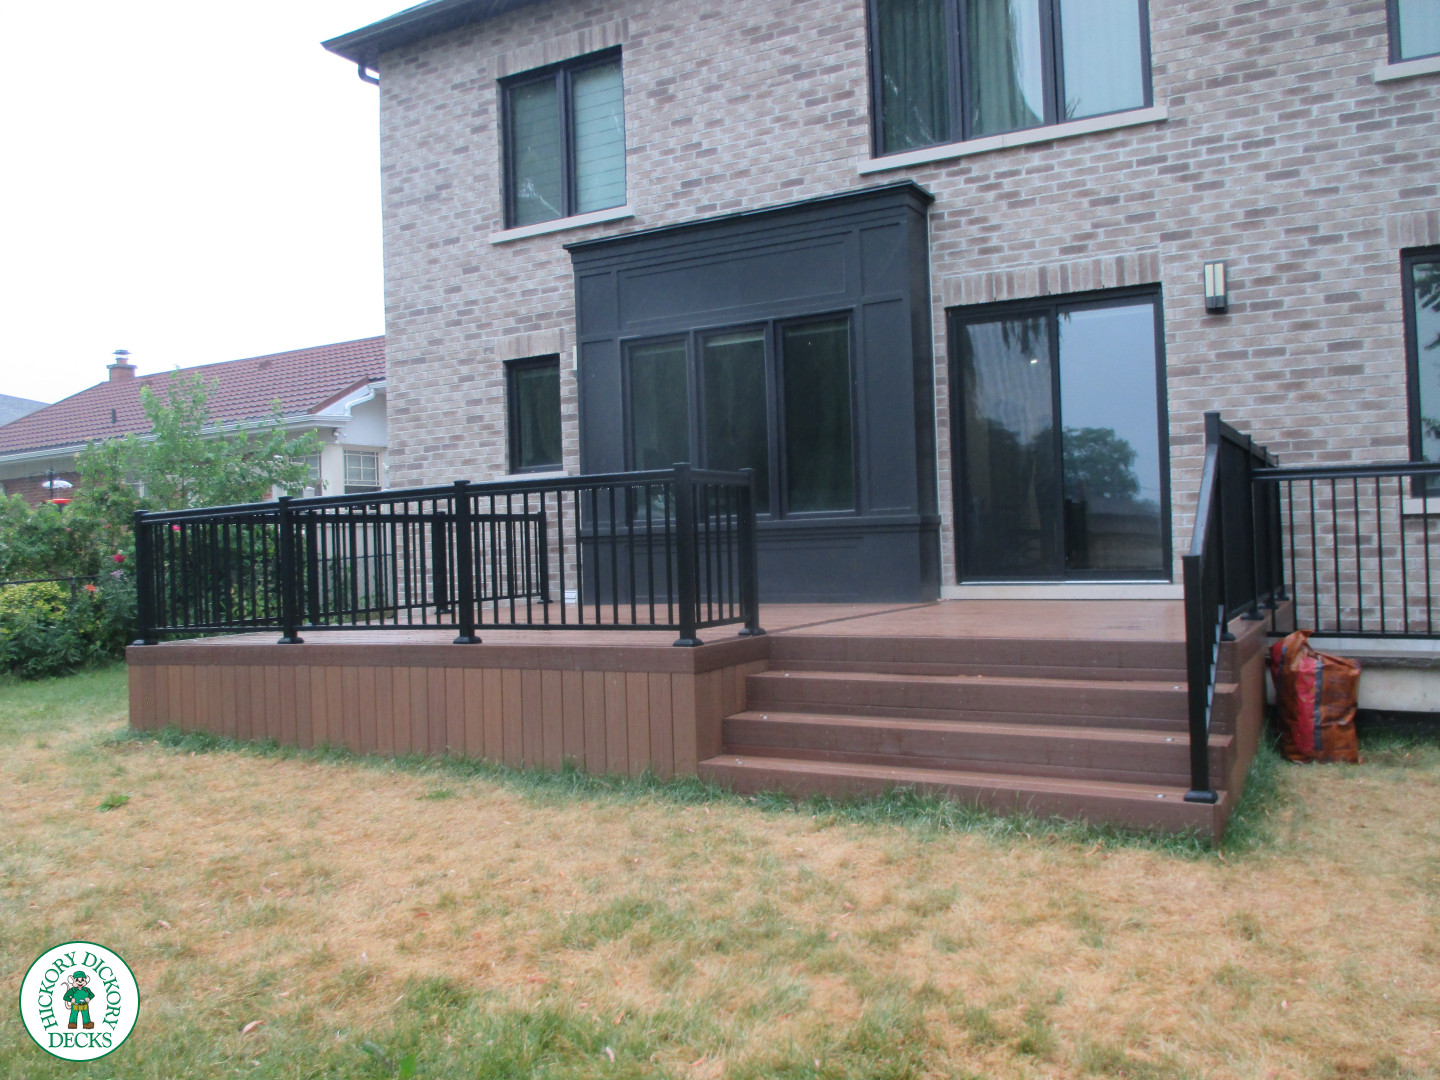 Low brown composite deck with black aluminum railing